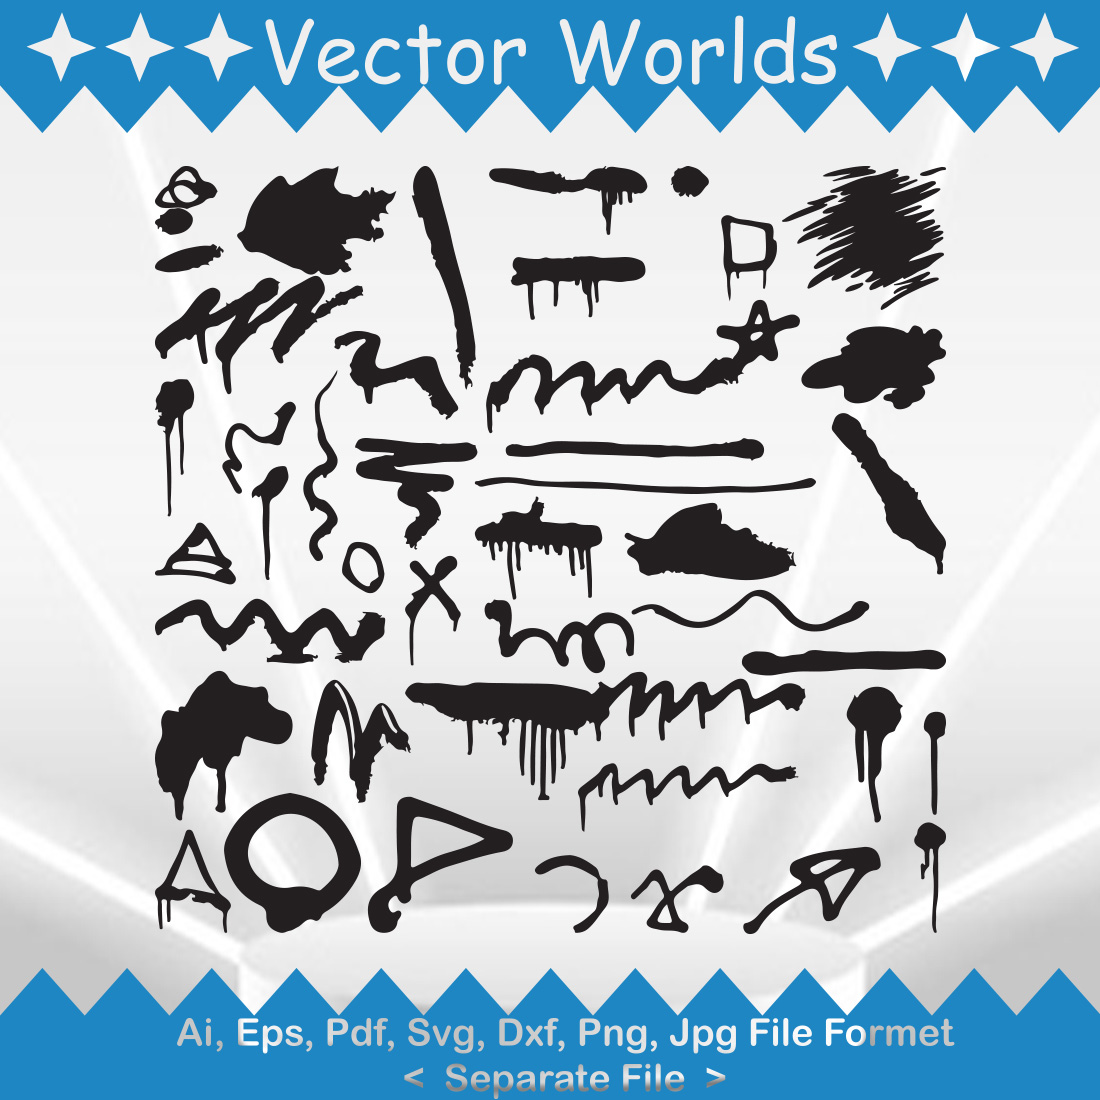 Paint Splatter SVG Vector Design cover image.